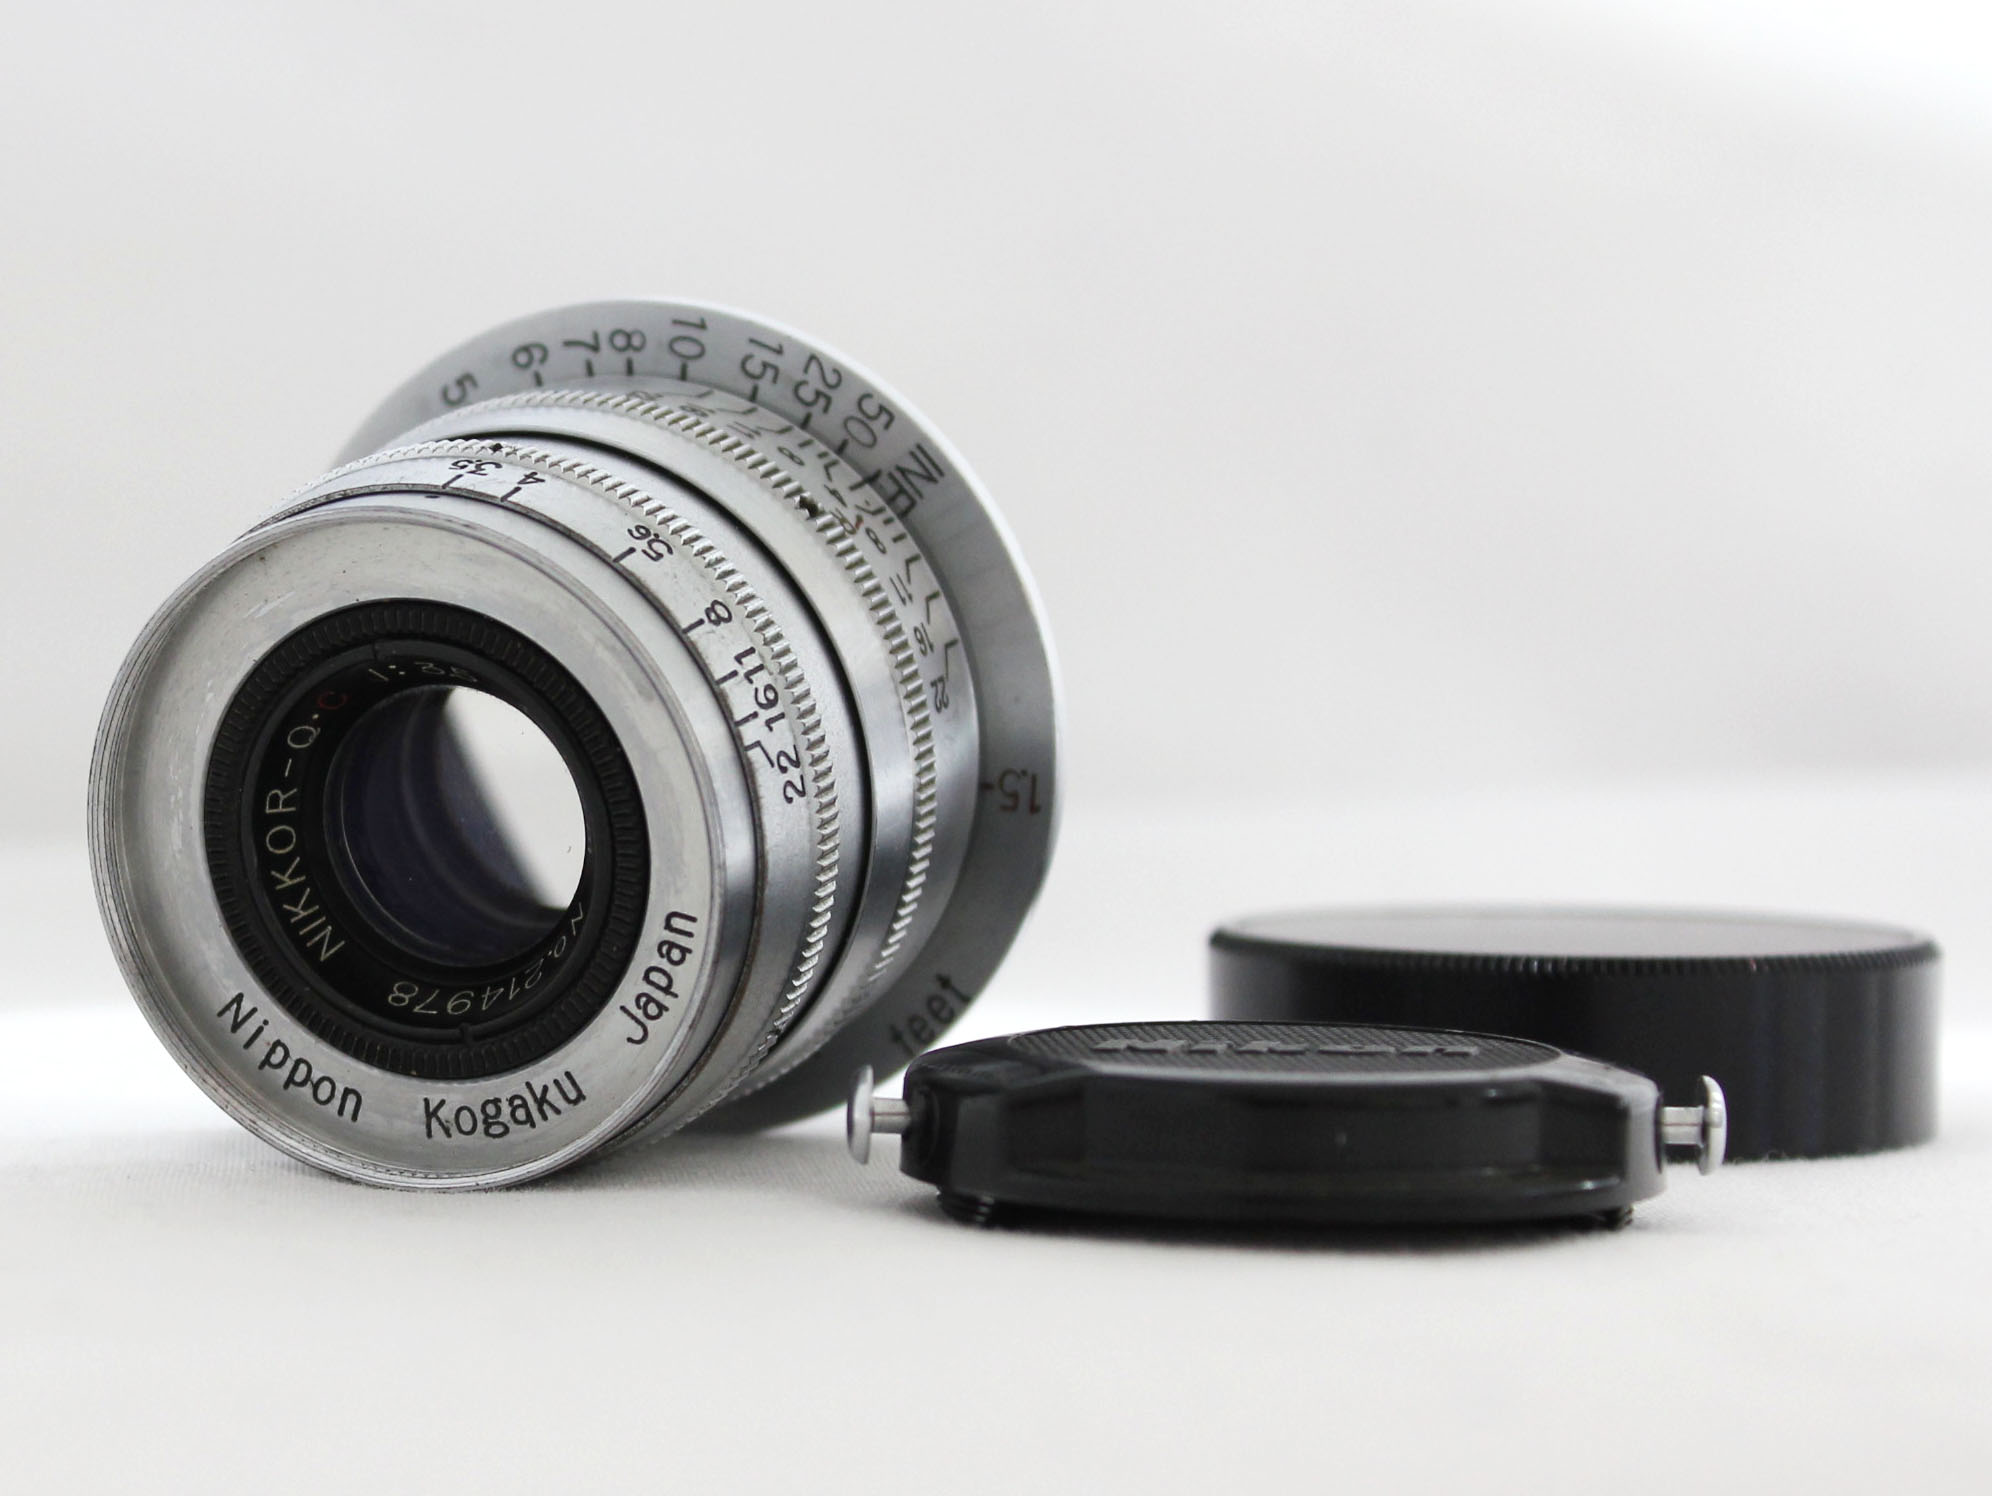 Japan Used Camera Shop | [Rare] Nikon Nikkor Q.C 50mm 5cm F/3.5 L39 LTM Leica Screw Mount Lens from Japan